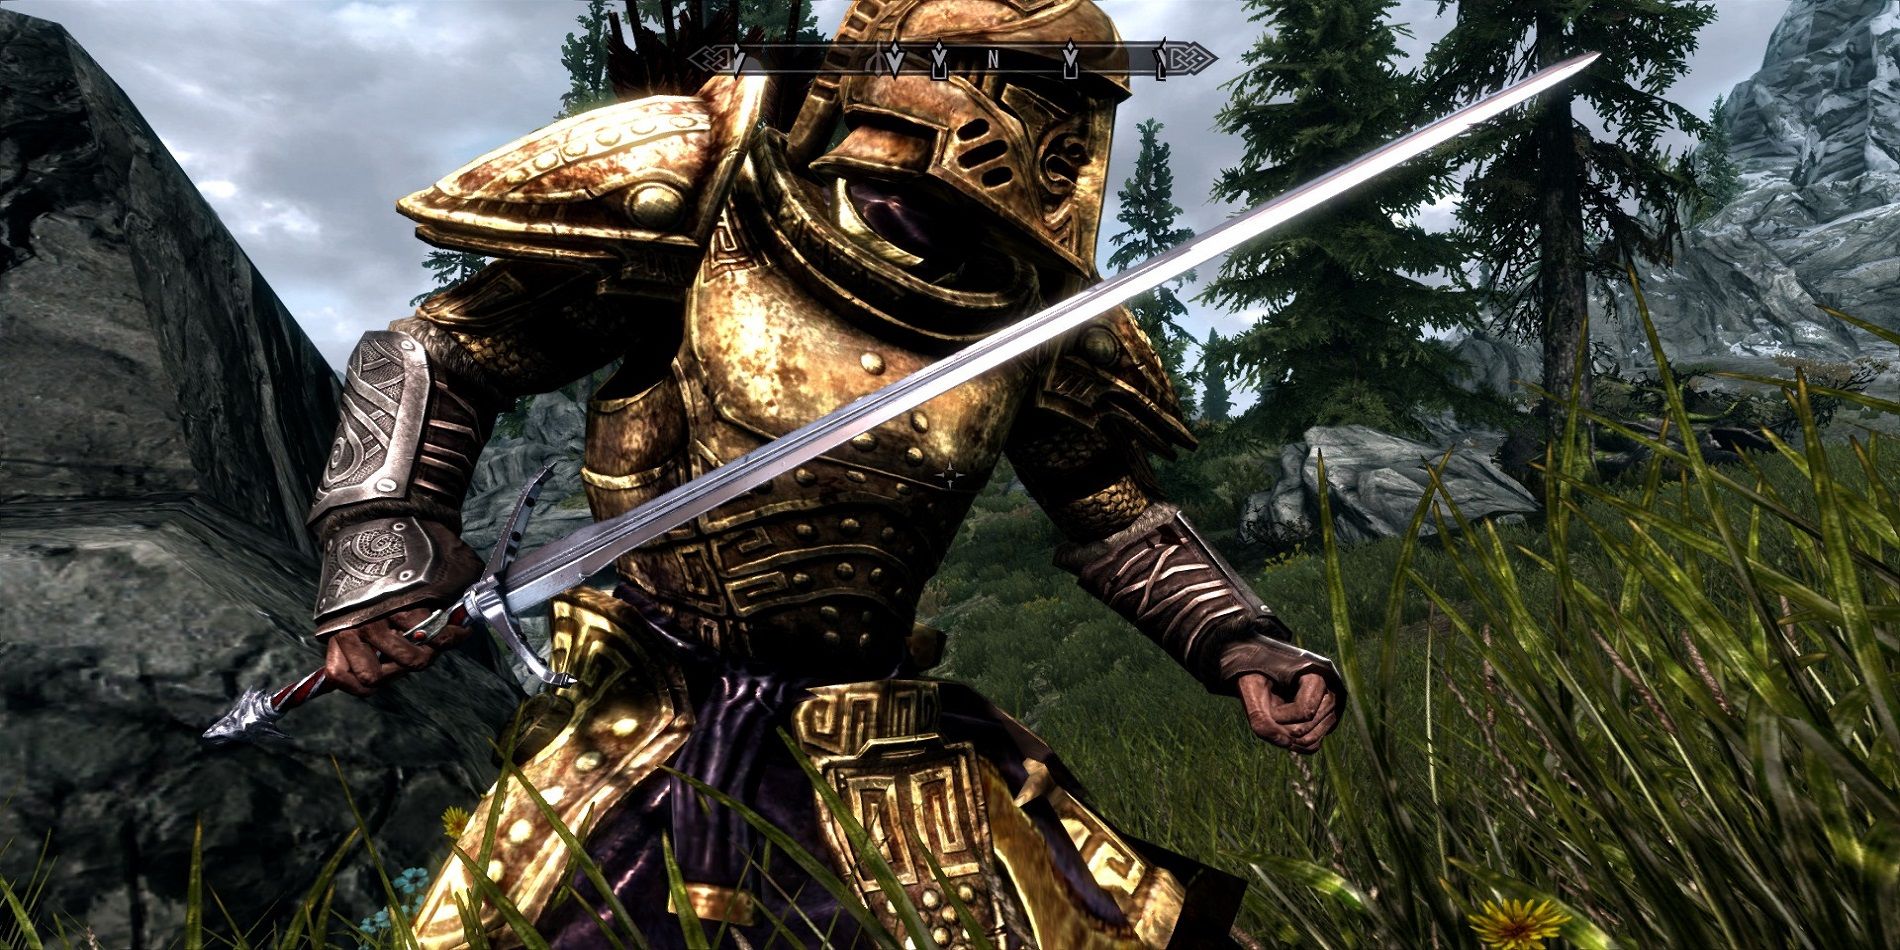 Elder Scrolls Skyrim Dwarven Armored Warrior carrying Silver Sword Daytime Forest